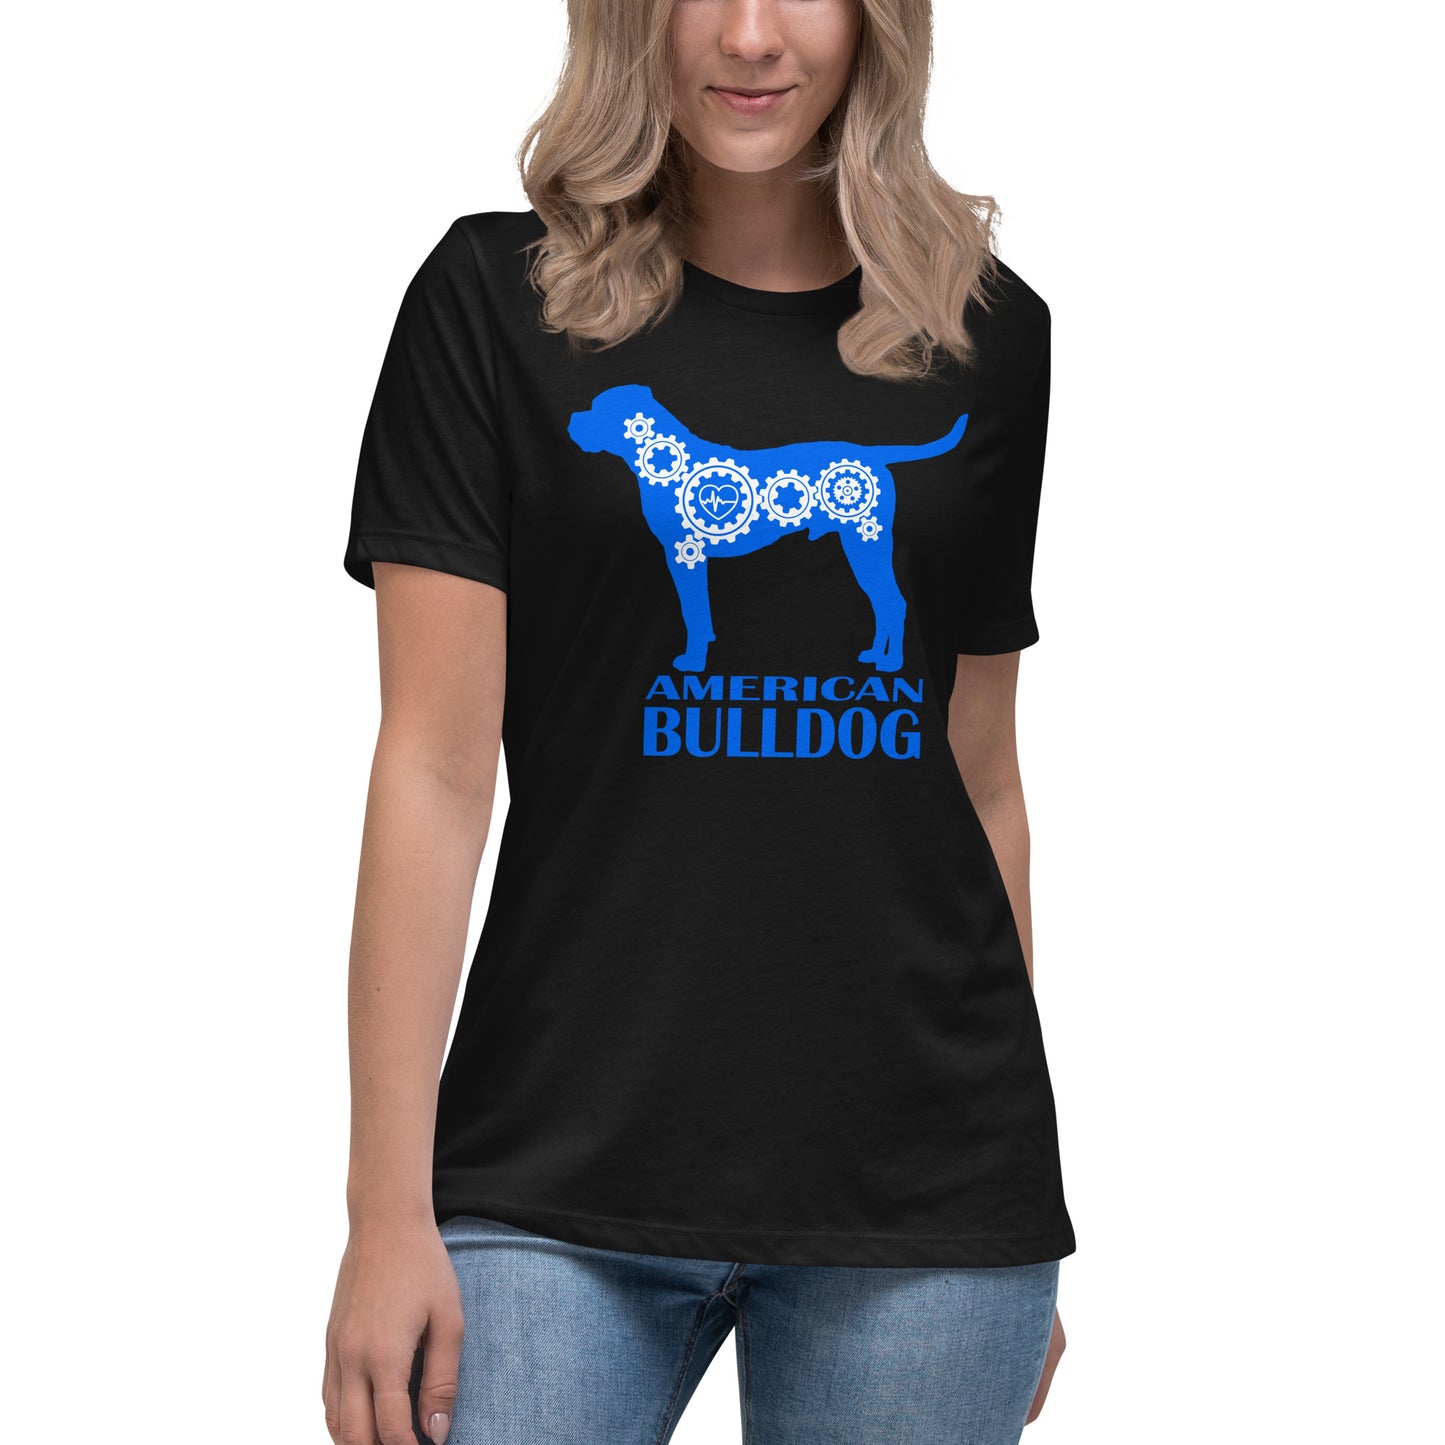 American Bulldog Bionic women’s black t-shirt by Dog Artistry.